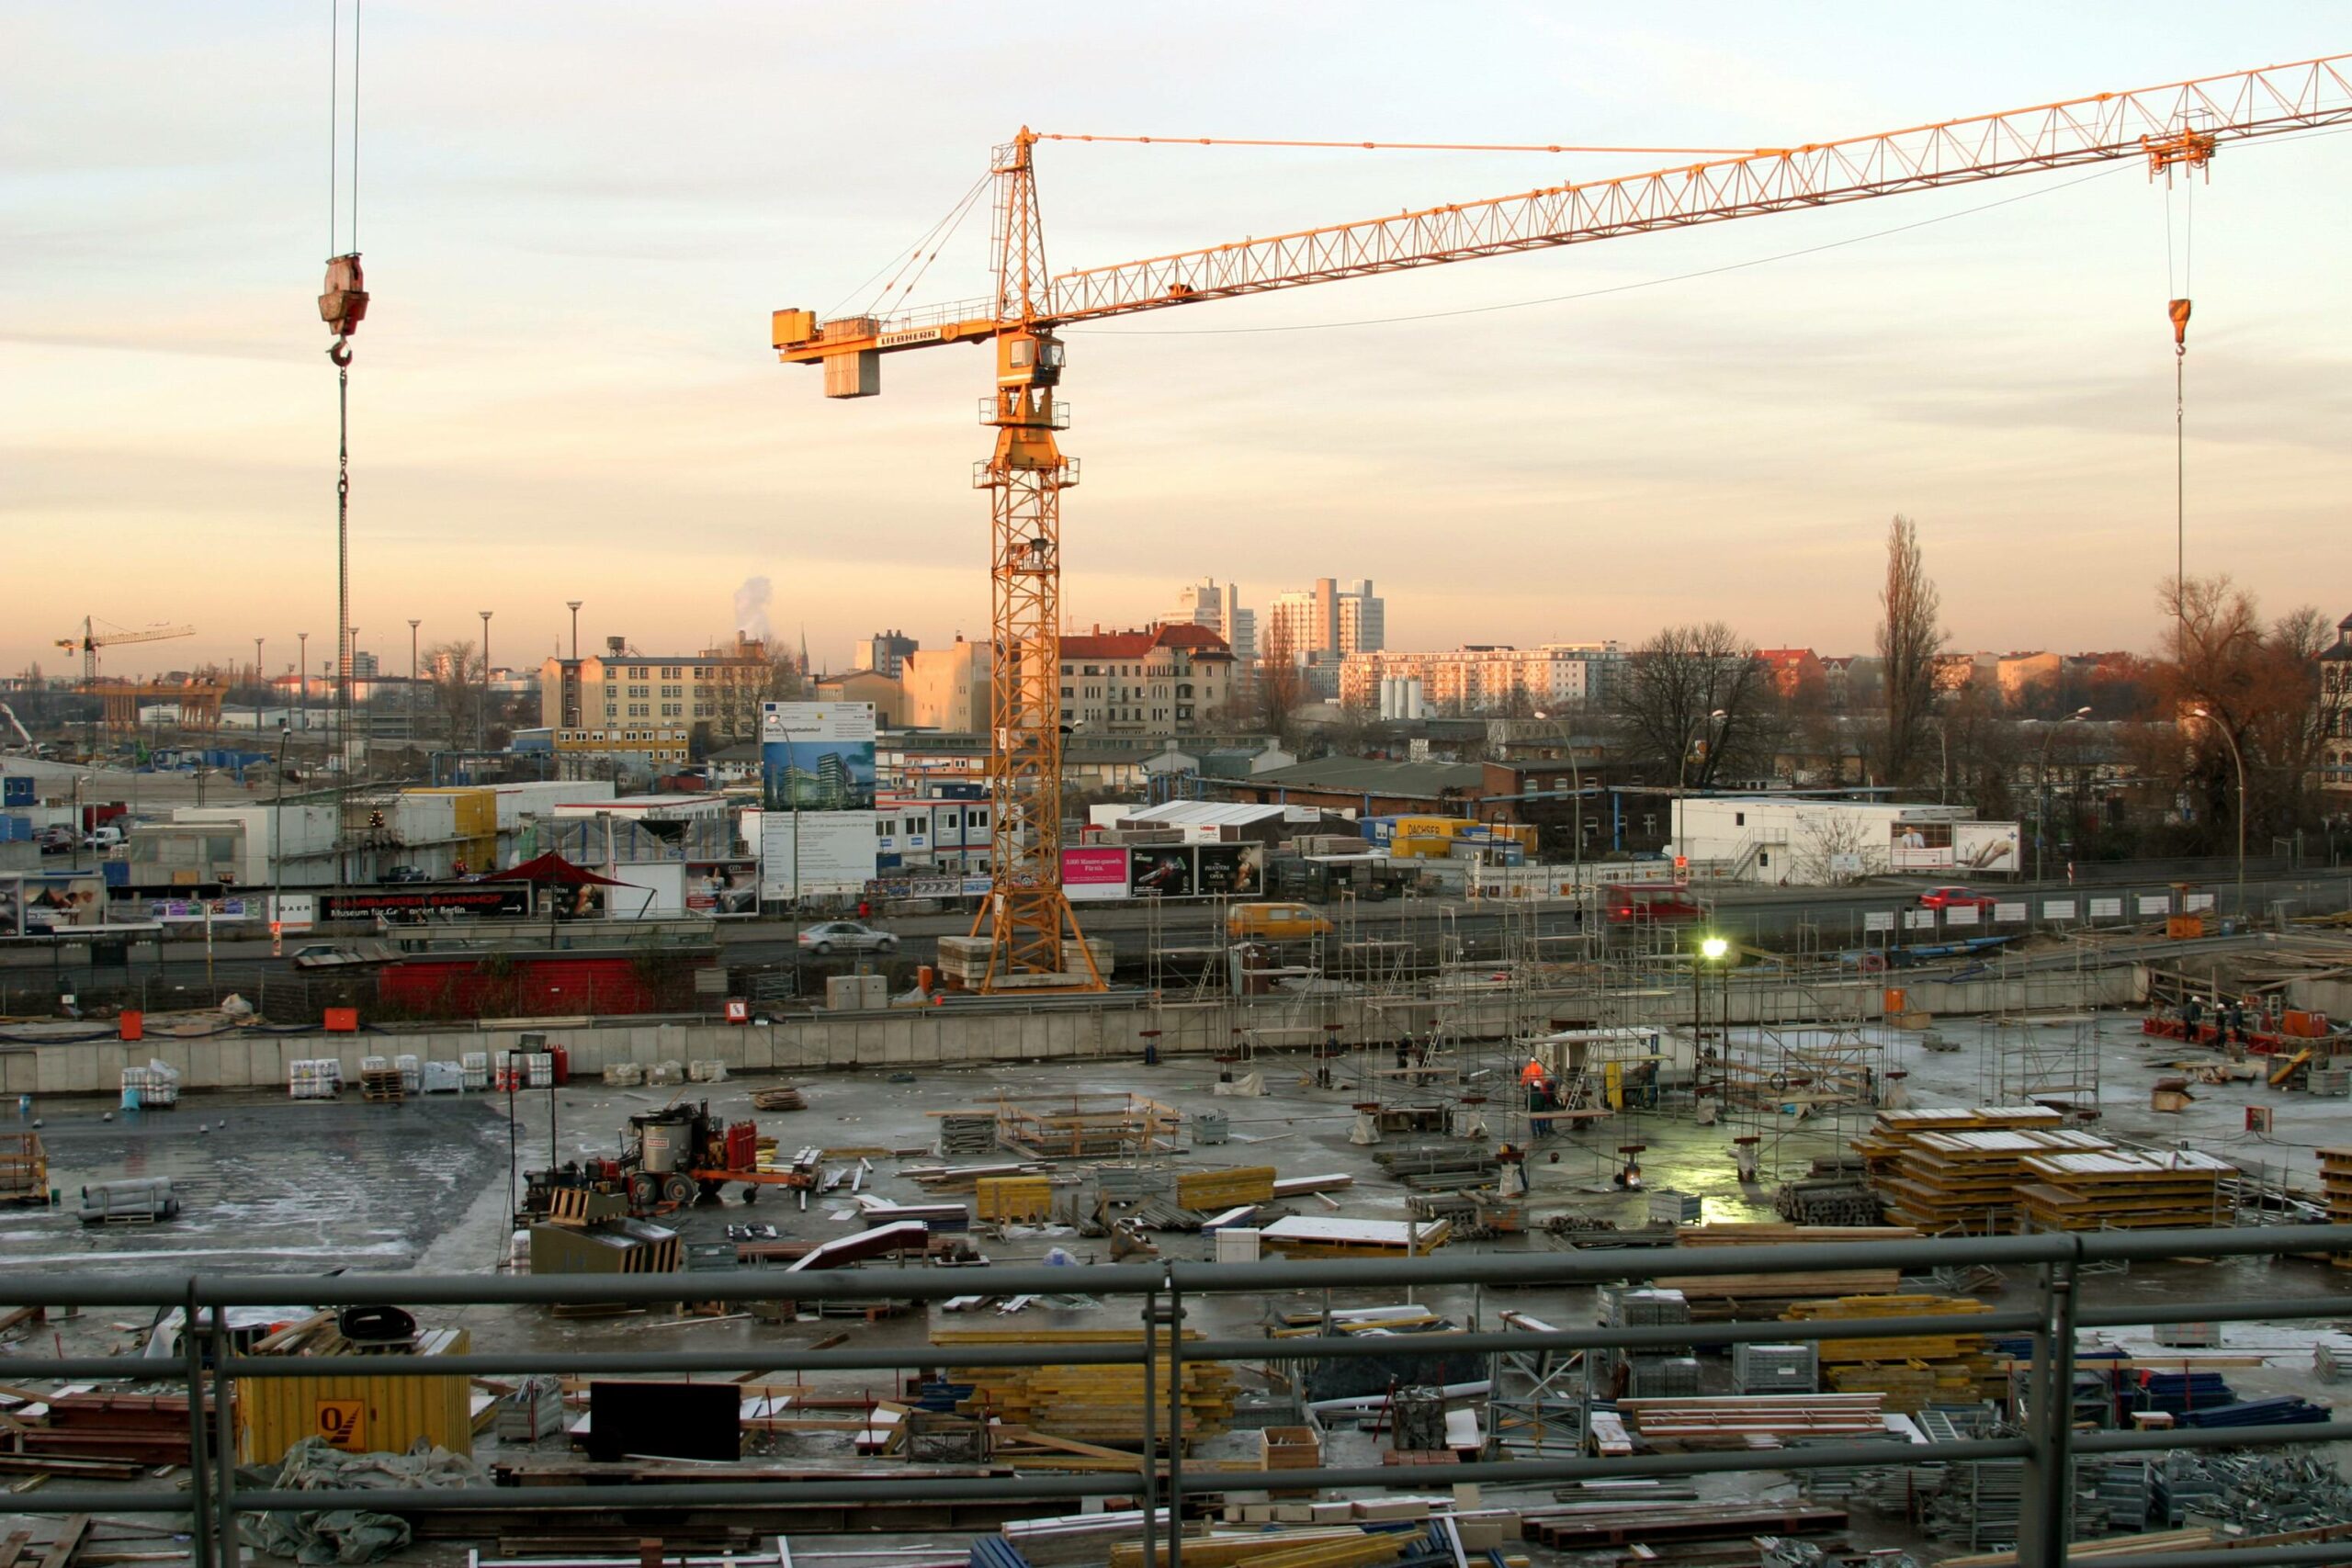 Ein Hauptbahnhof wird gebaut. Großbaustelle am Lehrter Bahnhof in Berlin, 2004. Foto: Imago/Ralph Peters